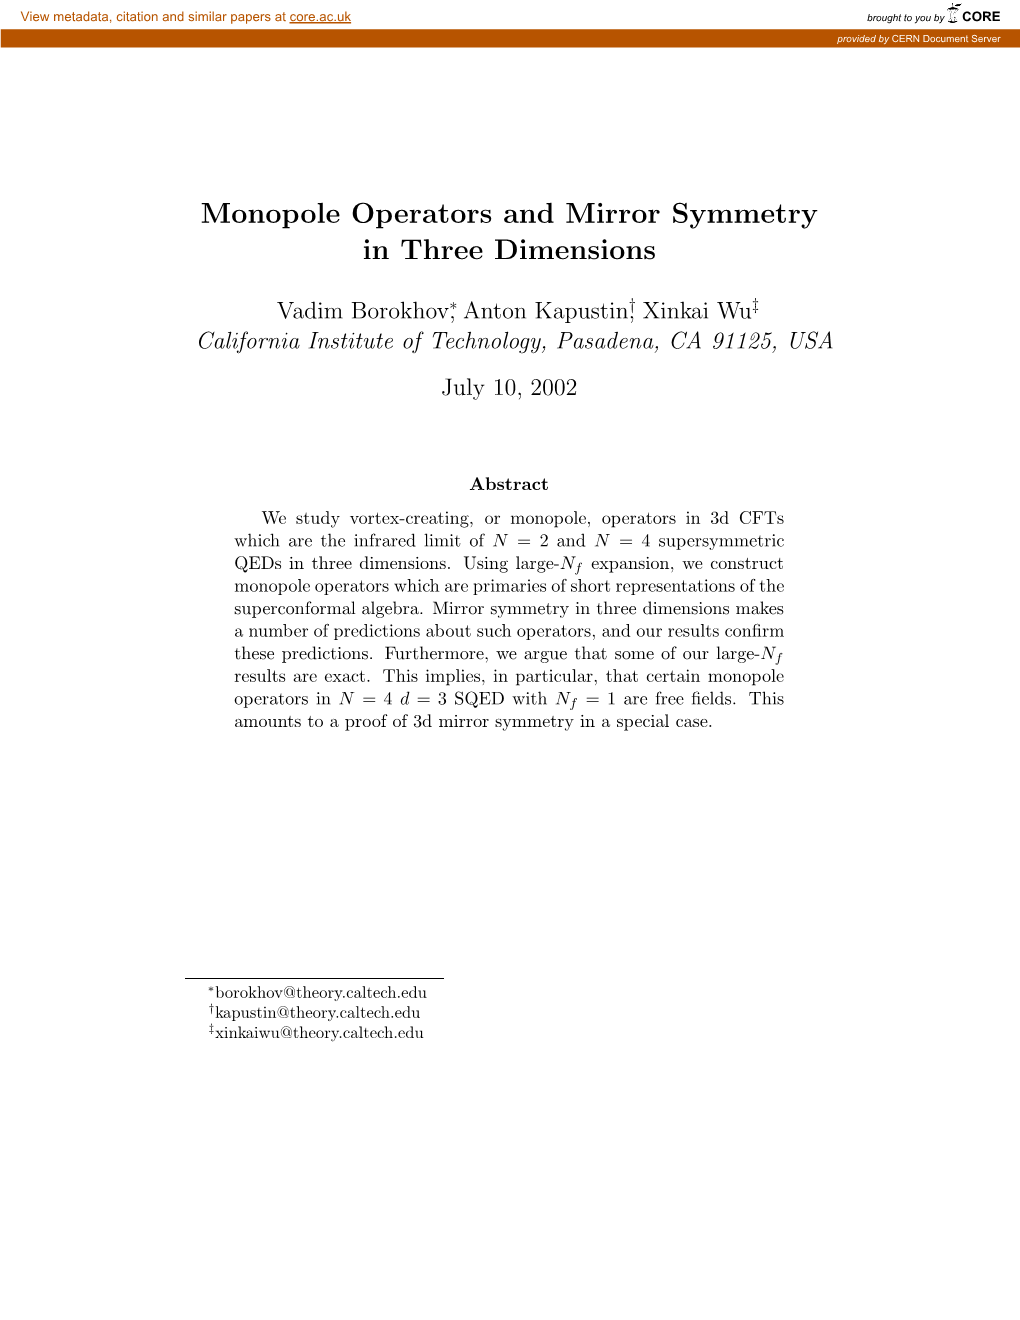 Monopole Operators and Mirror Symmetry in Three Dimensions